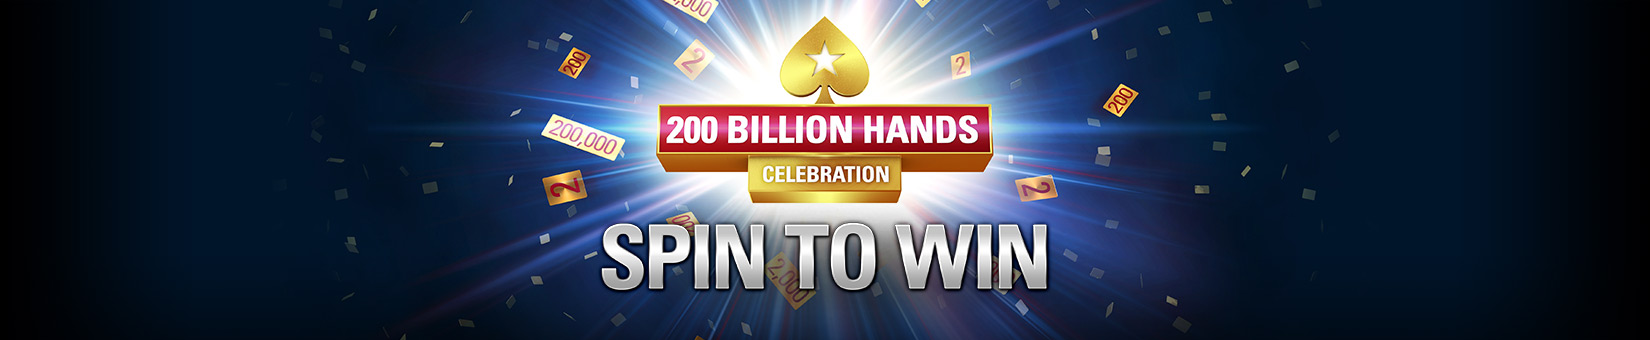 Online casino usa no deposit bonus keep what you win